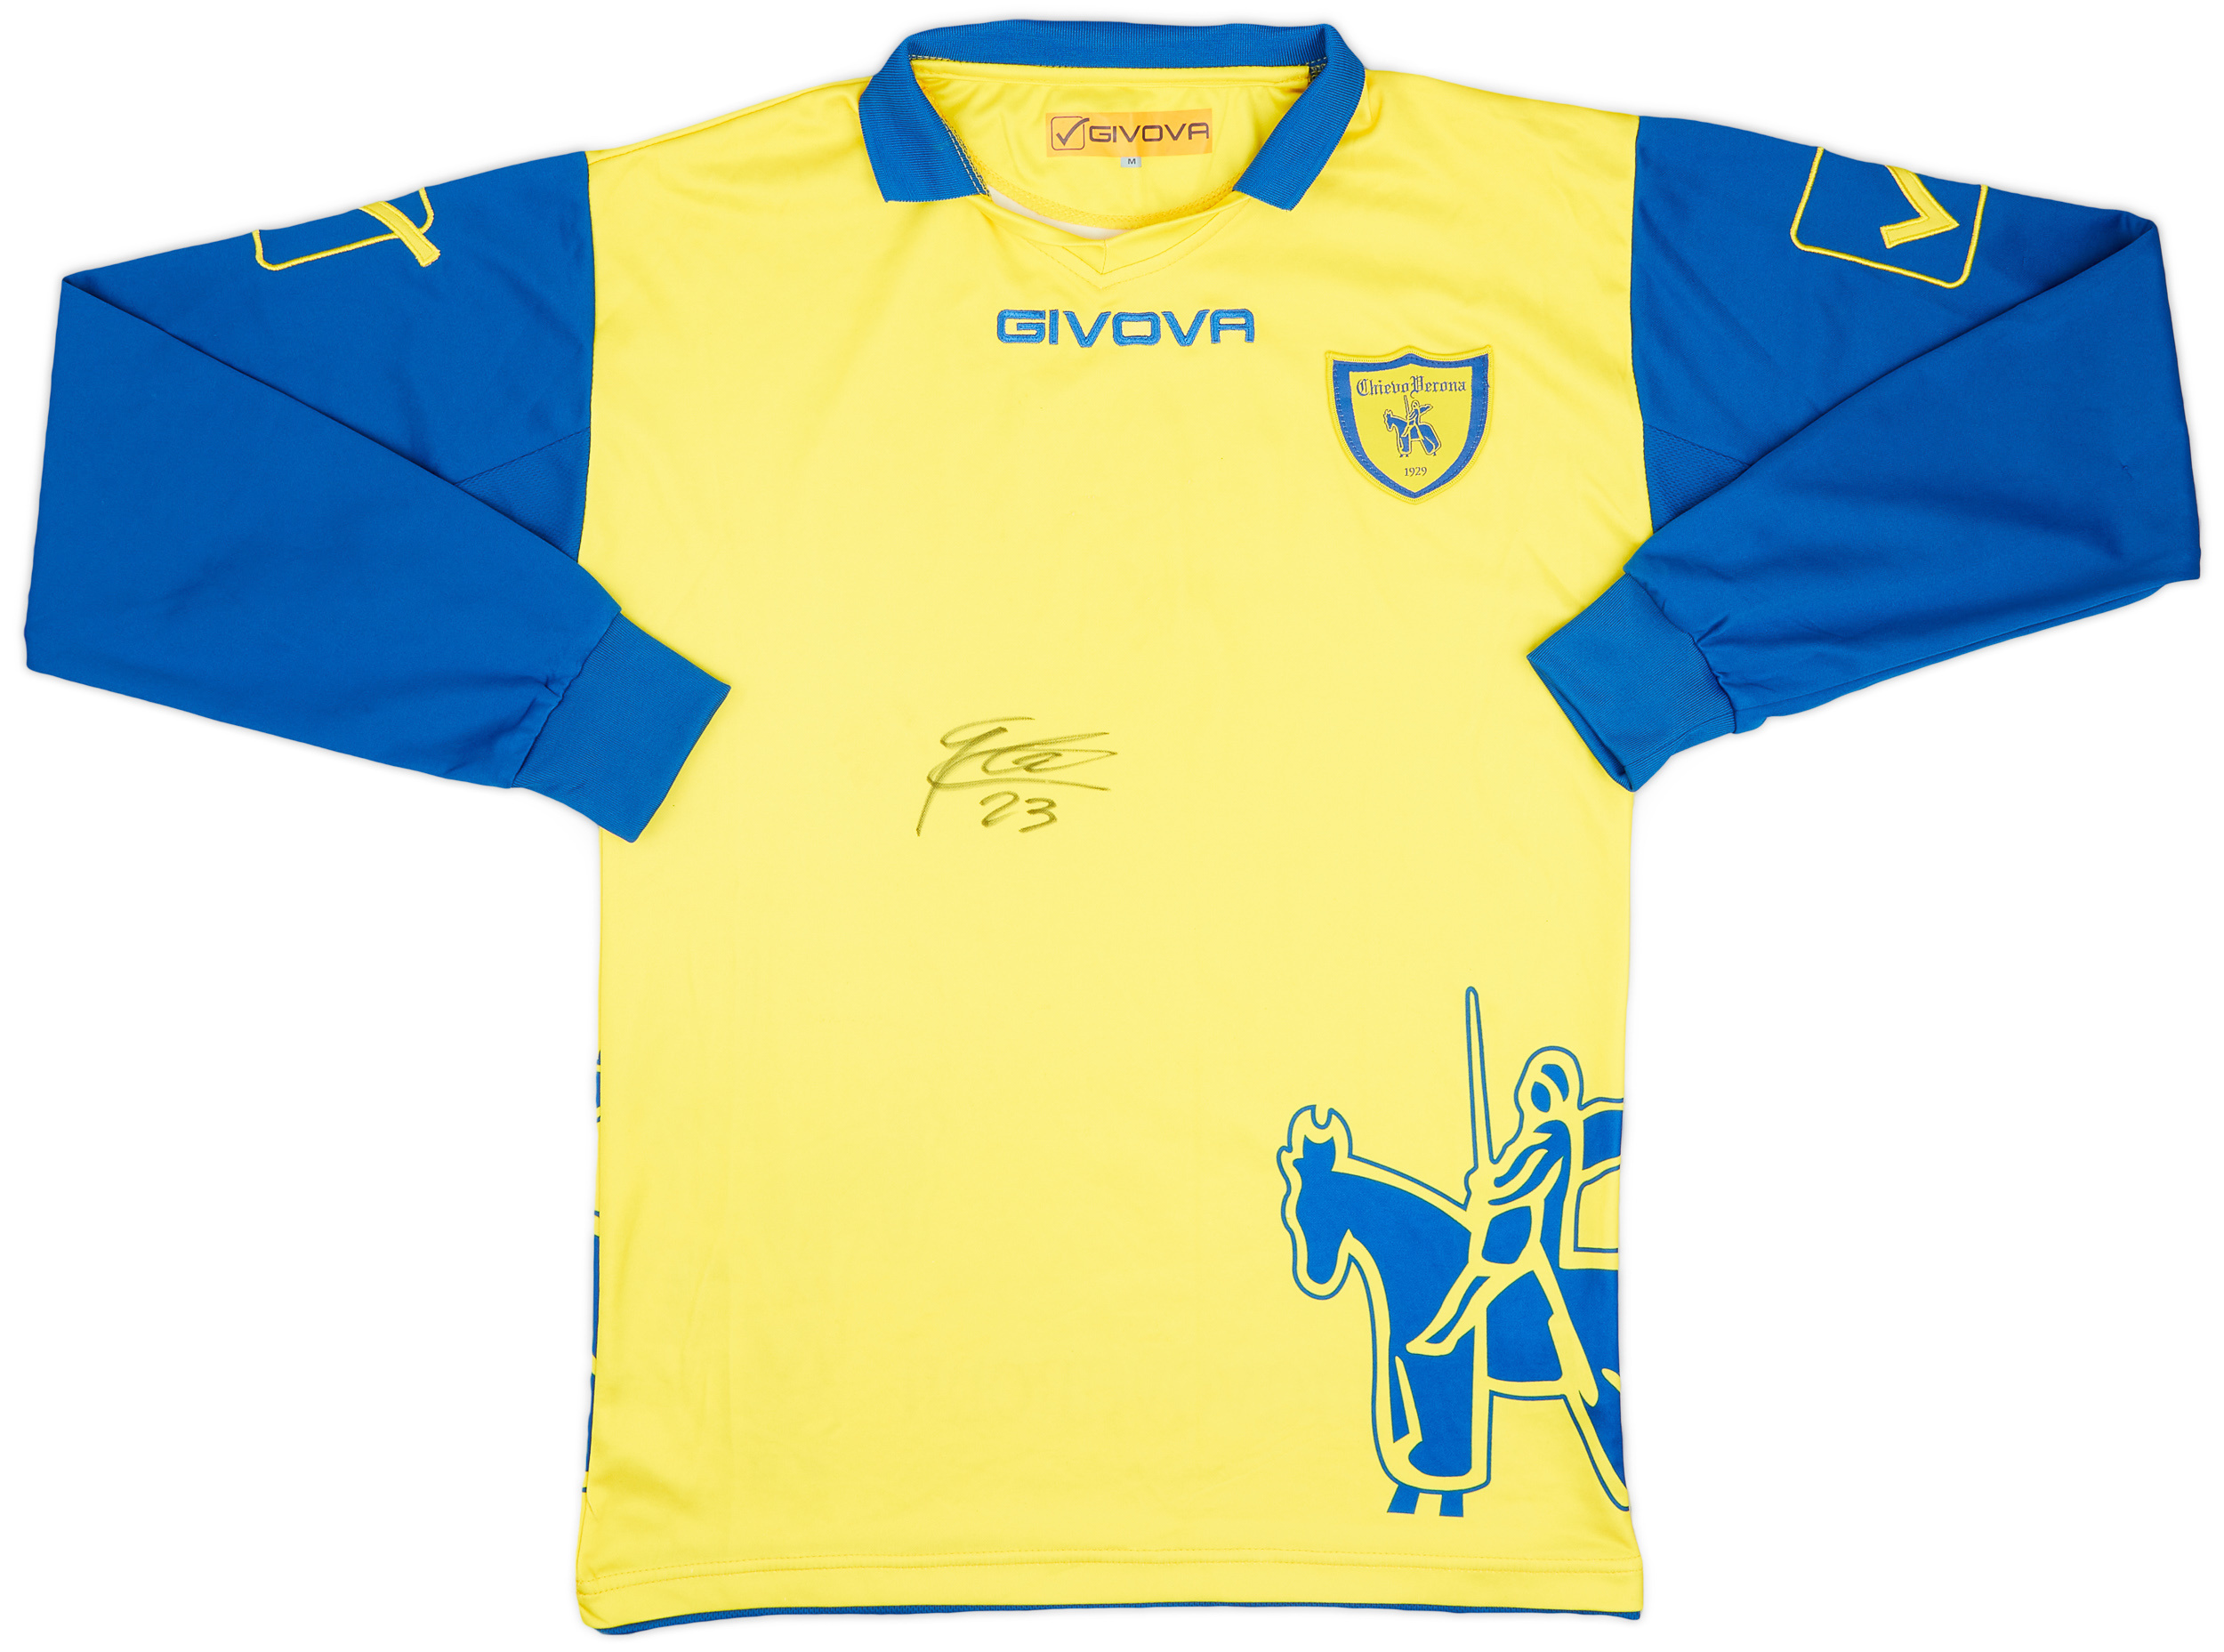 2012-13 Chievo Verona Signed Home Shirt - 8/10 - ()